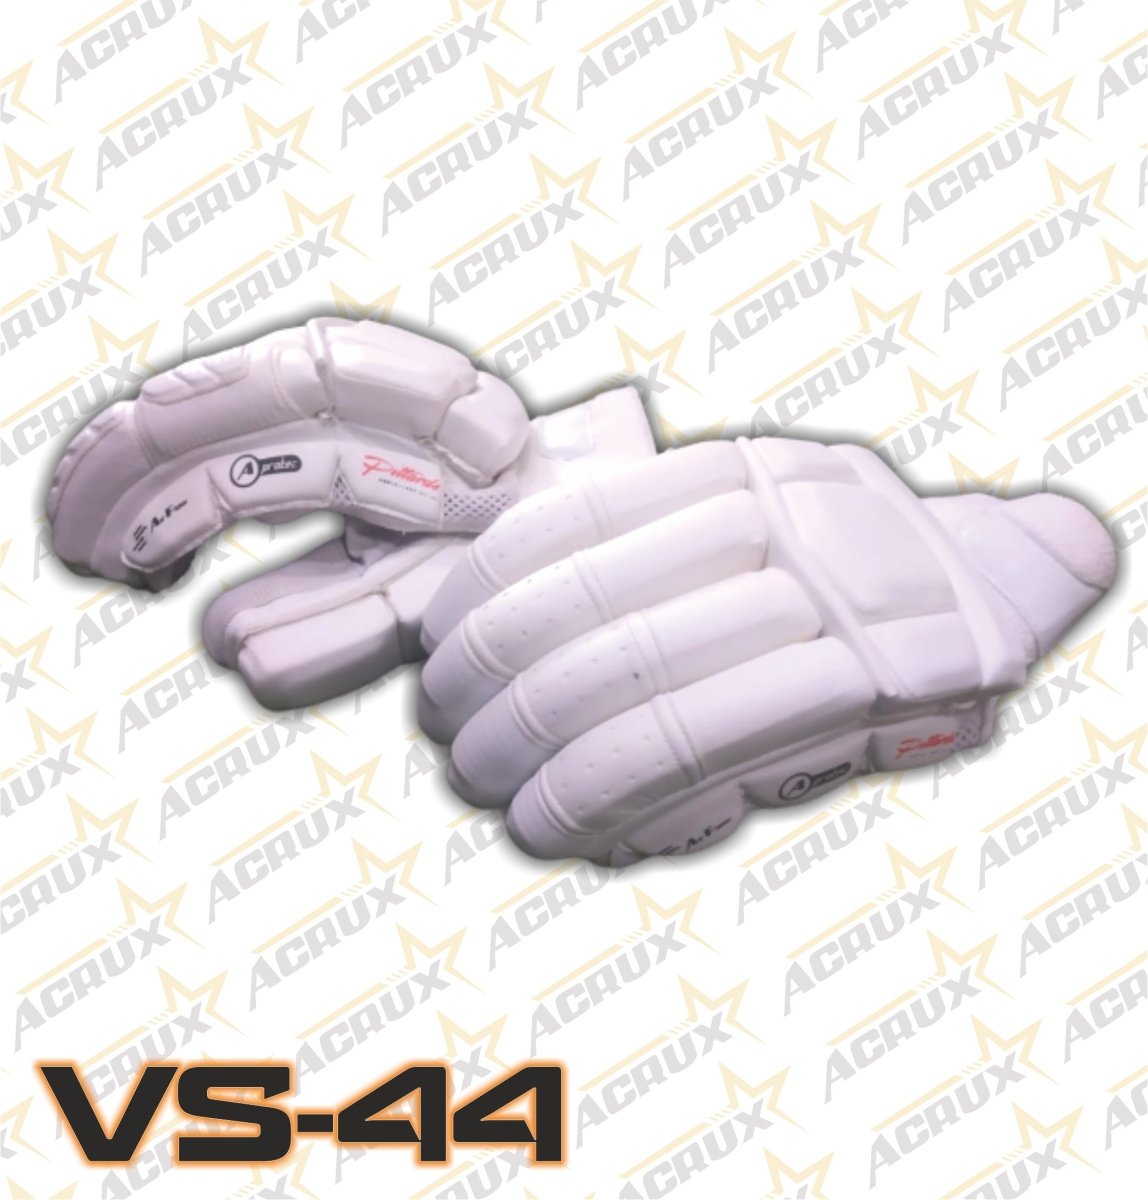 Cricket Batting Gloves VS-44 +Clean Skin Batting Pads Combo - Acrux Sports